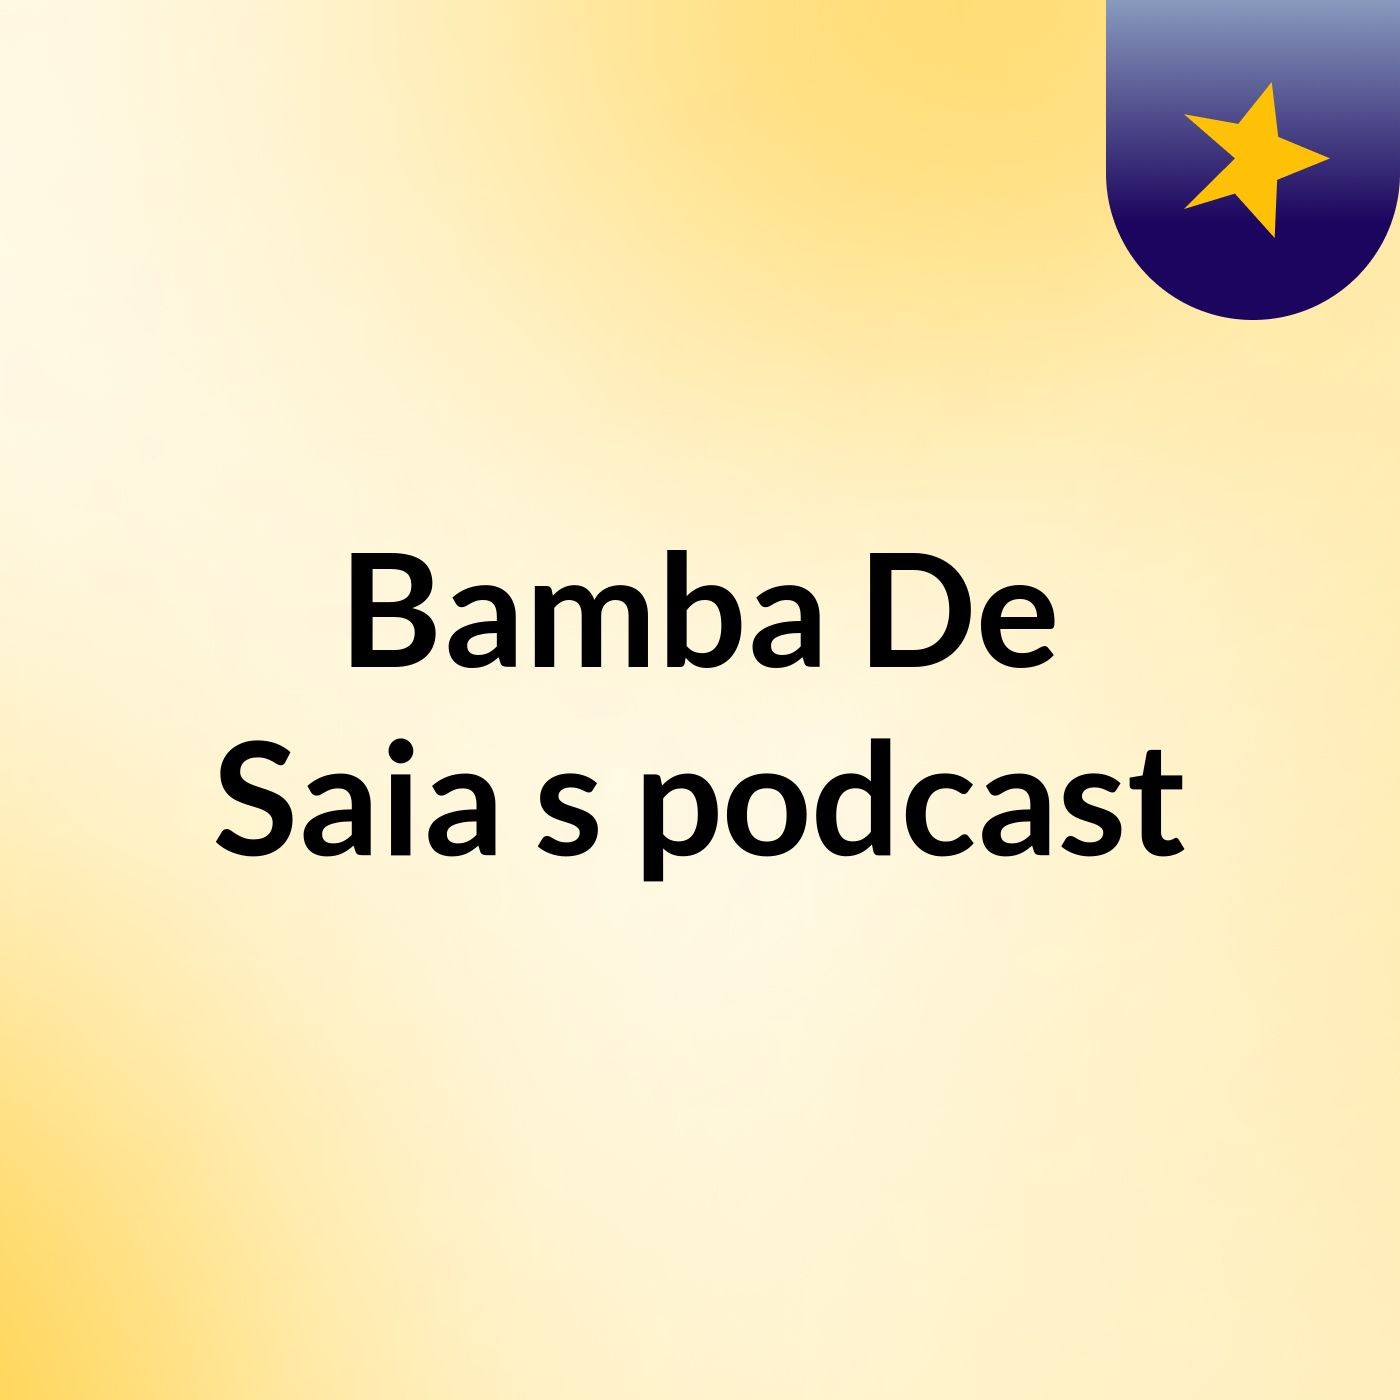 Bamba De Saia's podcast